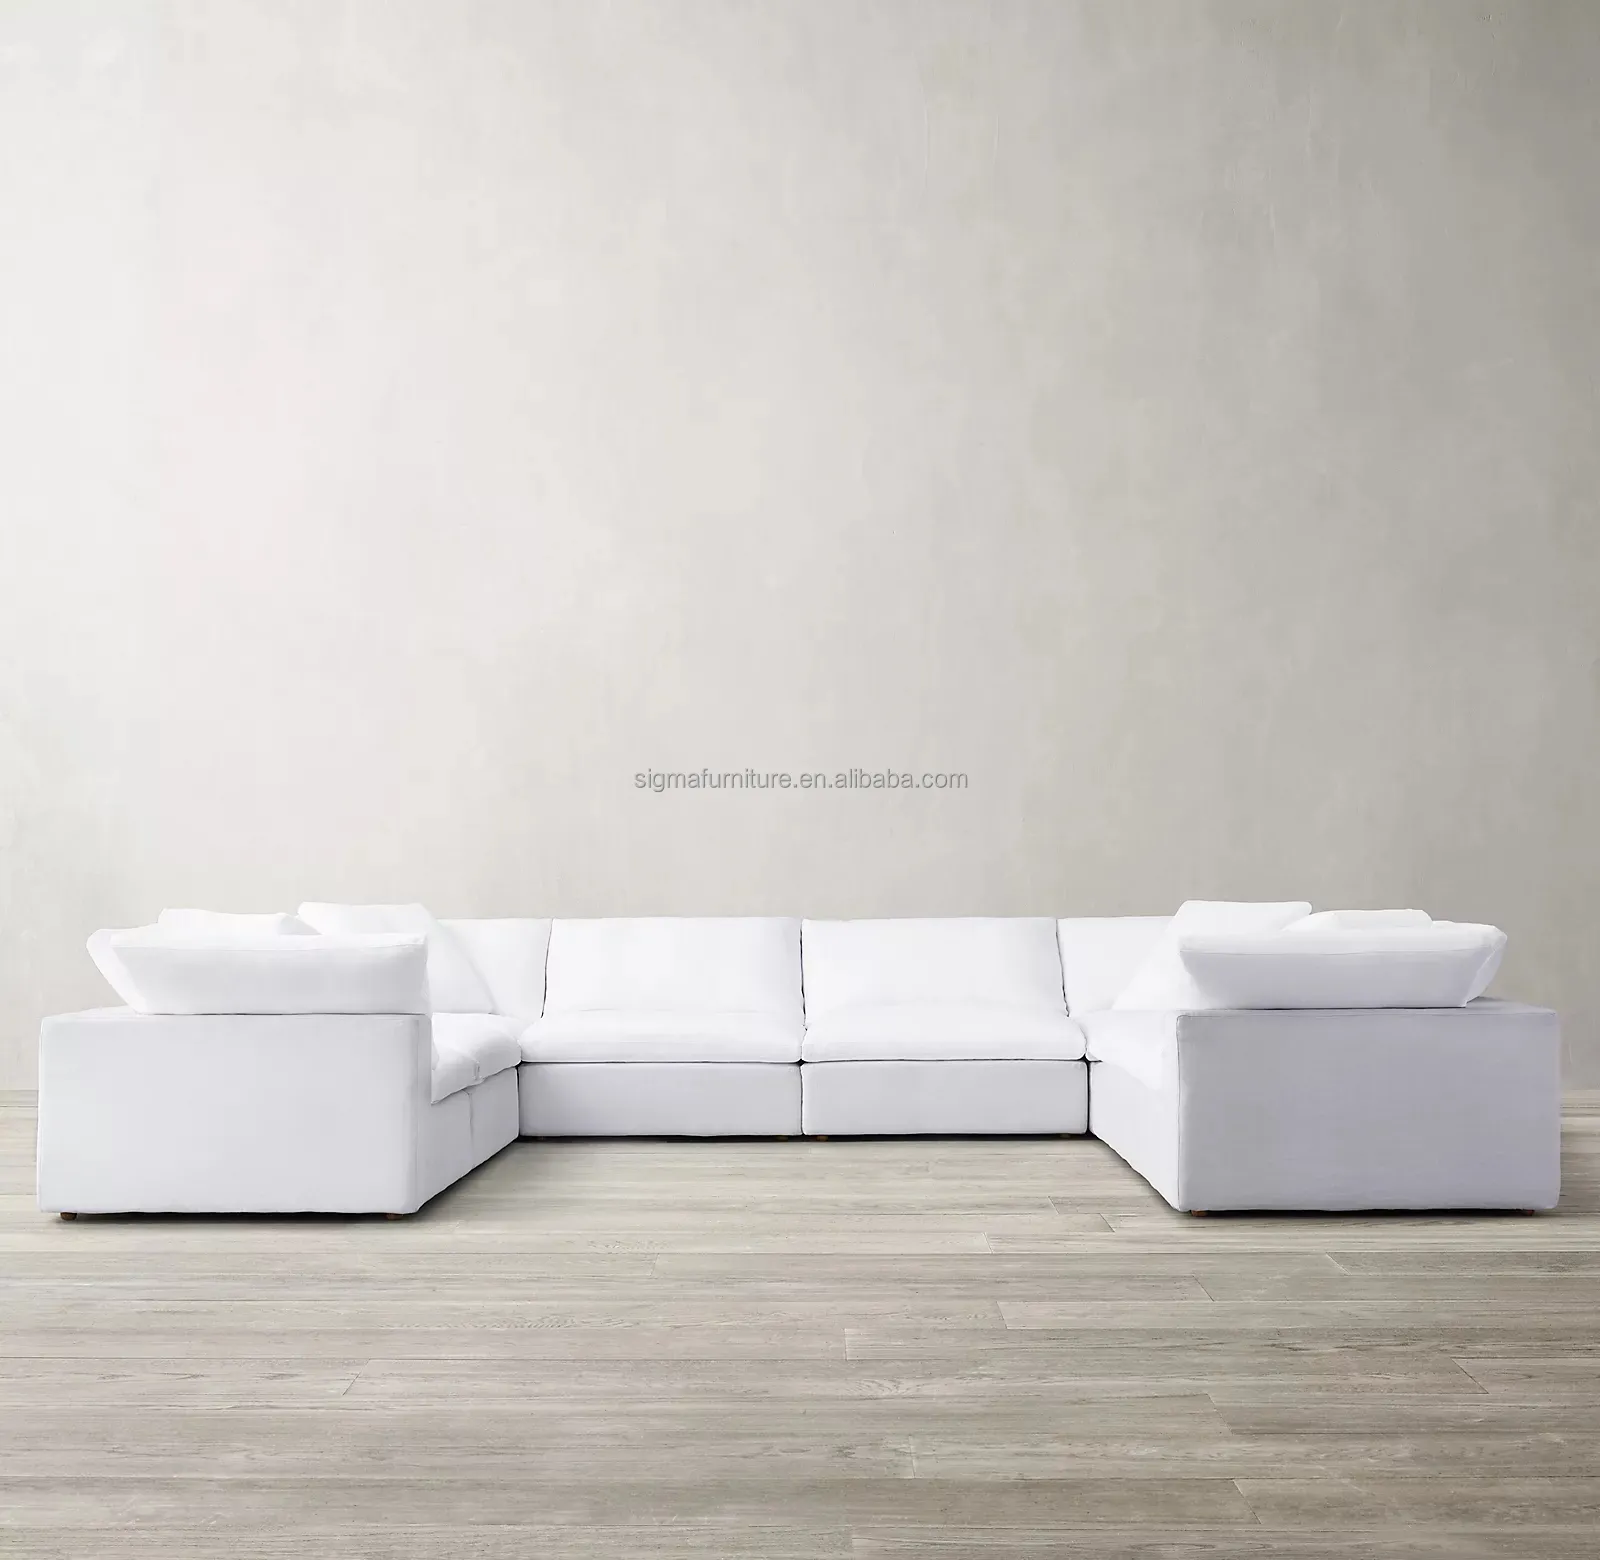 Hot Design Nordic Style Schlafs ofa moderne Wohnzimmer möbel Cloud Sofa Set L-Form Schnitts ofa modular